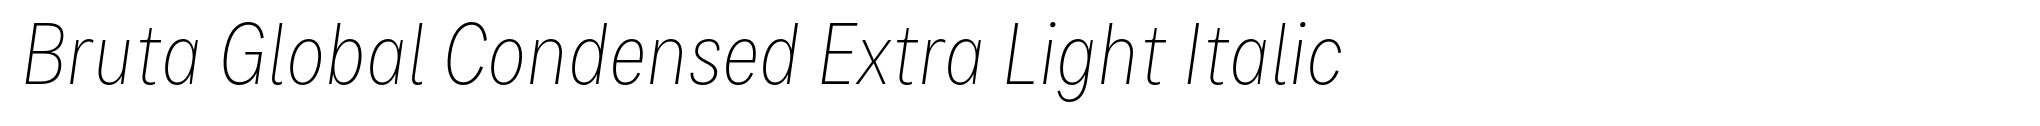 Bruta Global Condensed Extra Light Italic image